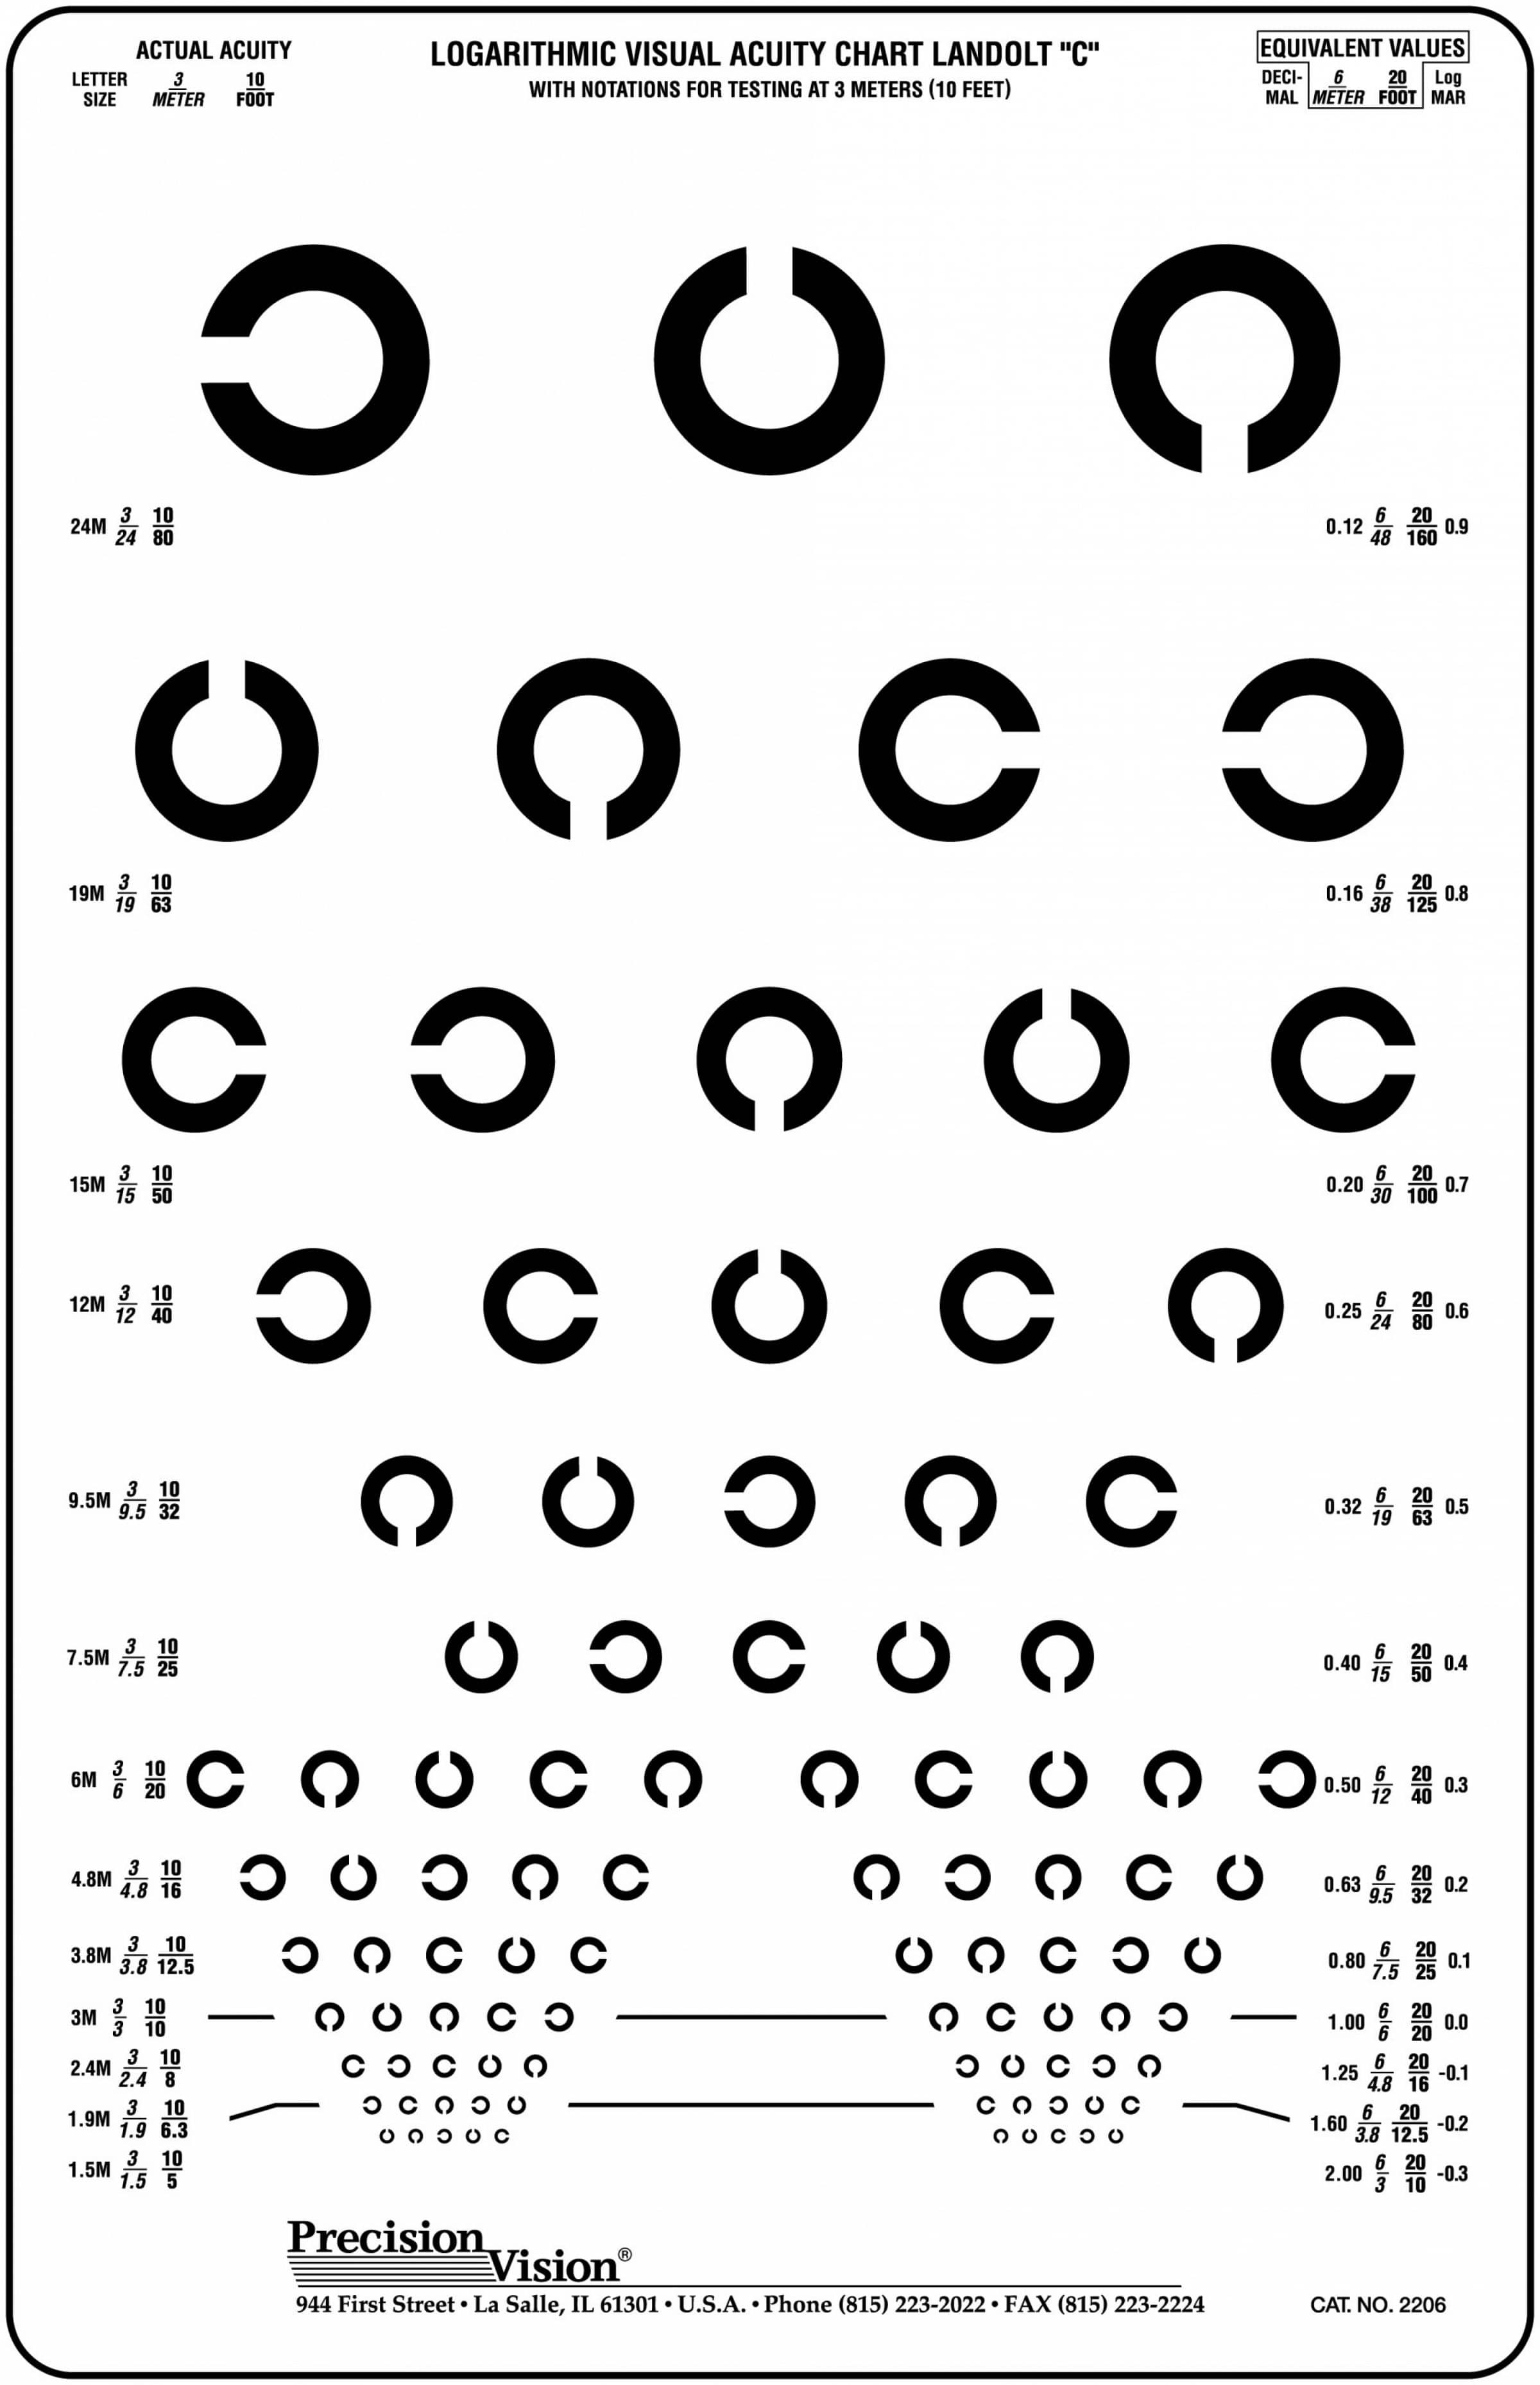 Landolt C Eye Chart